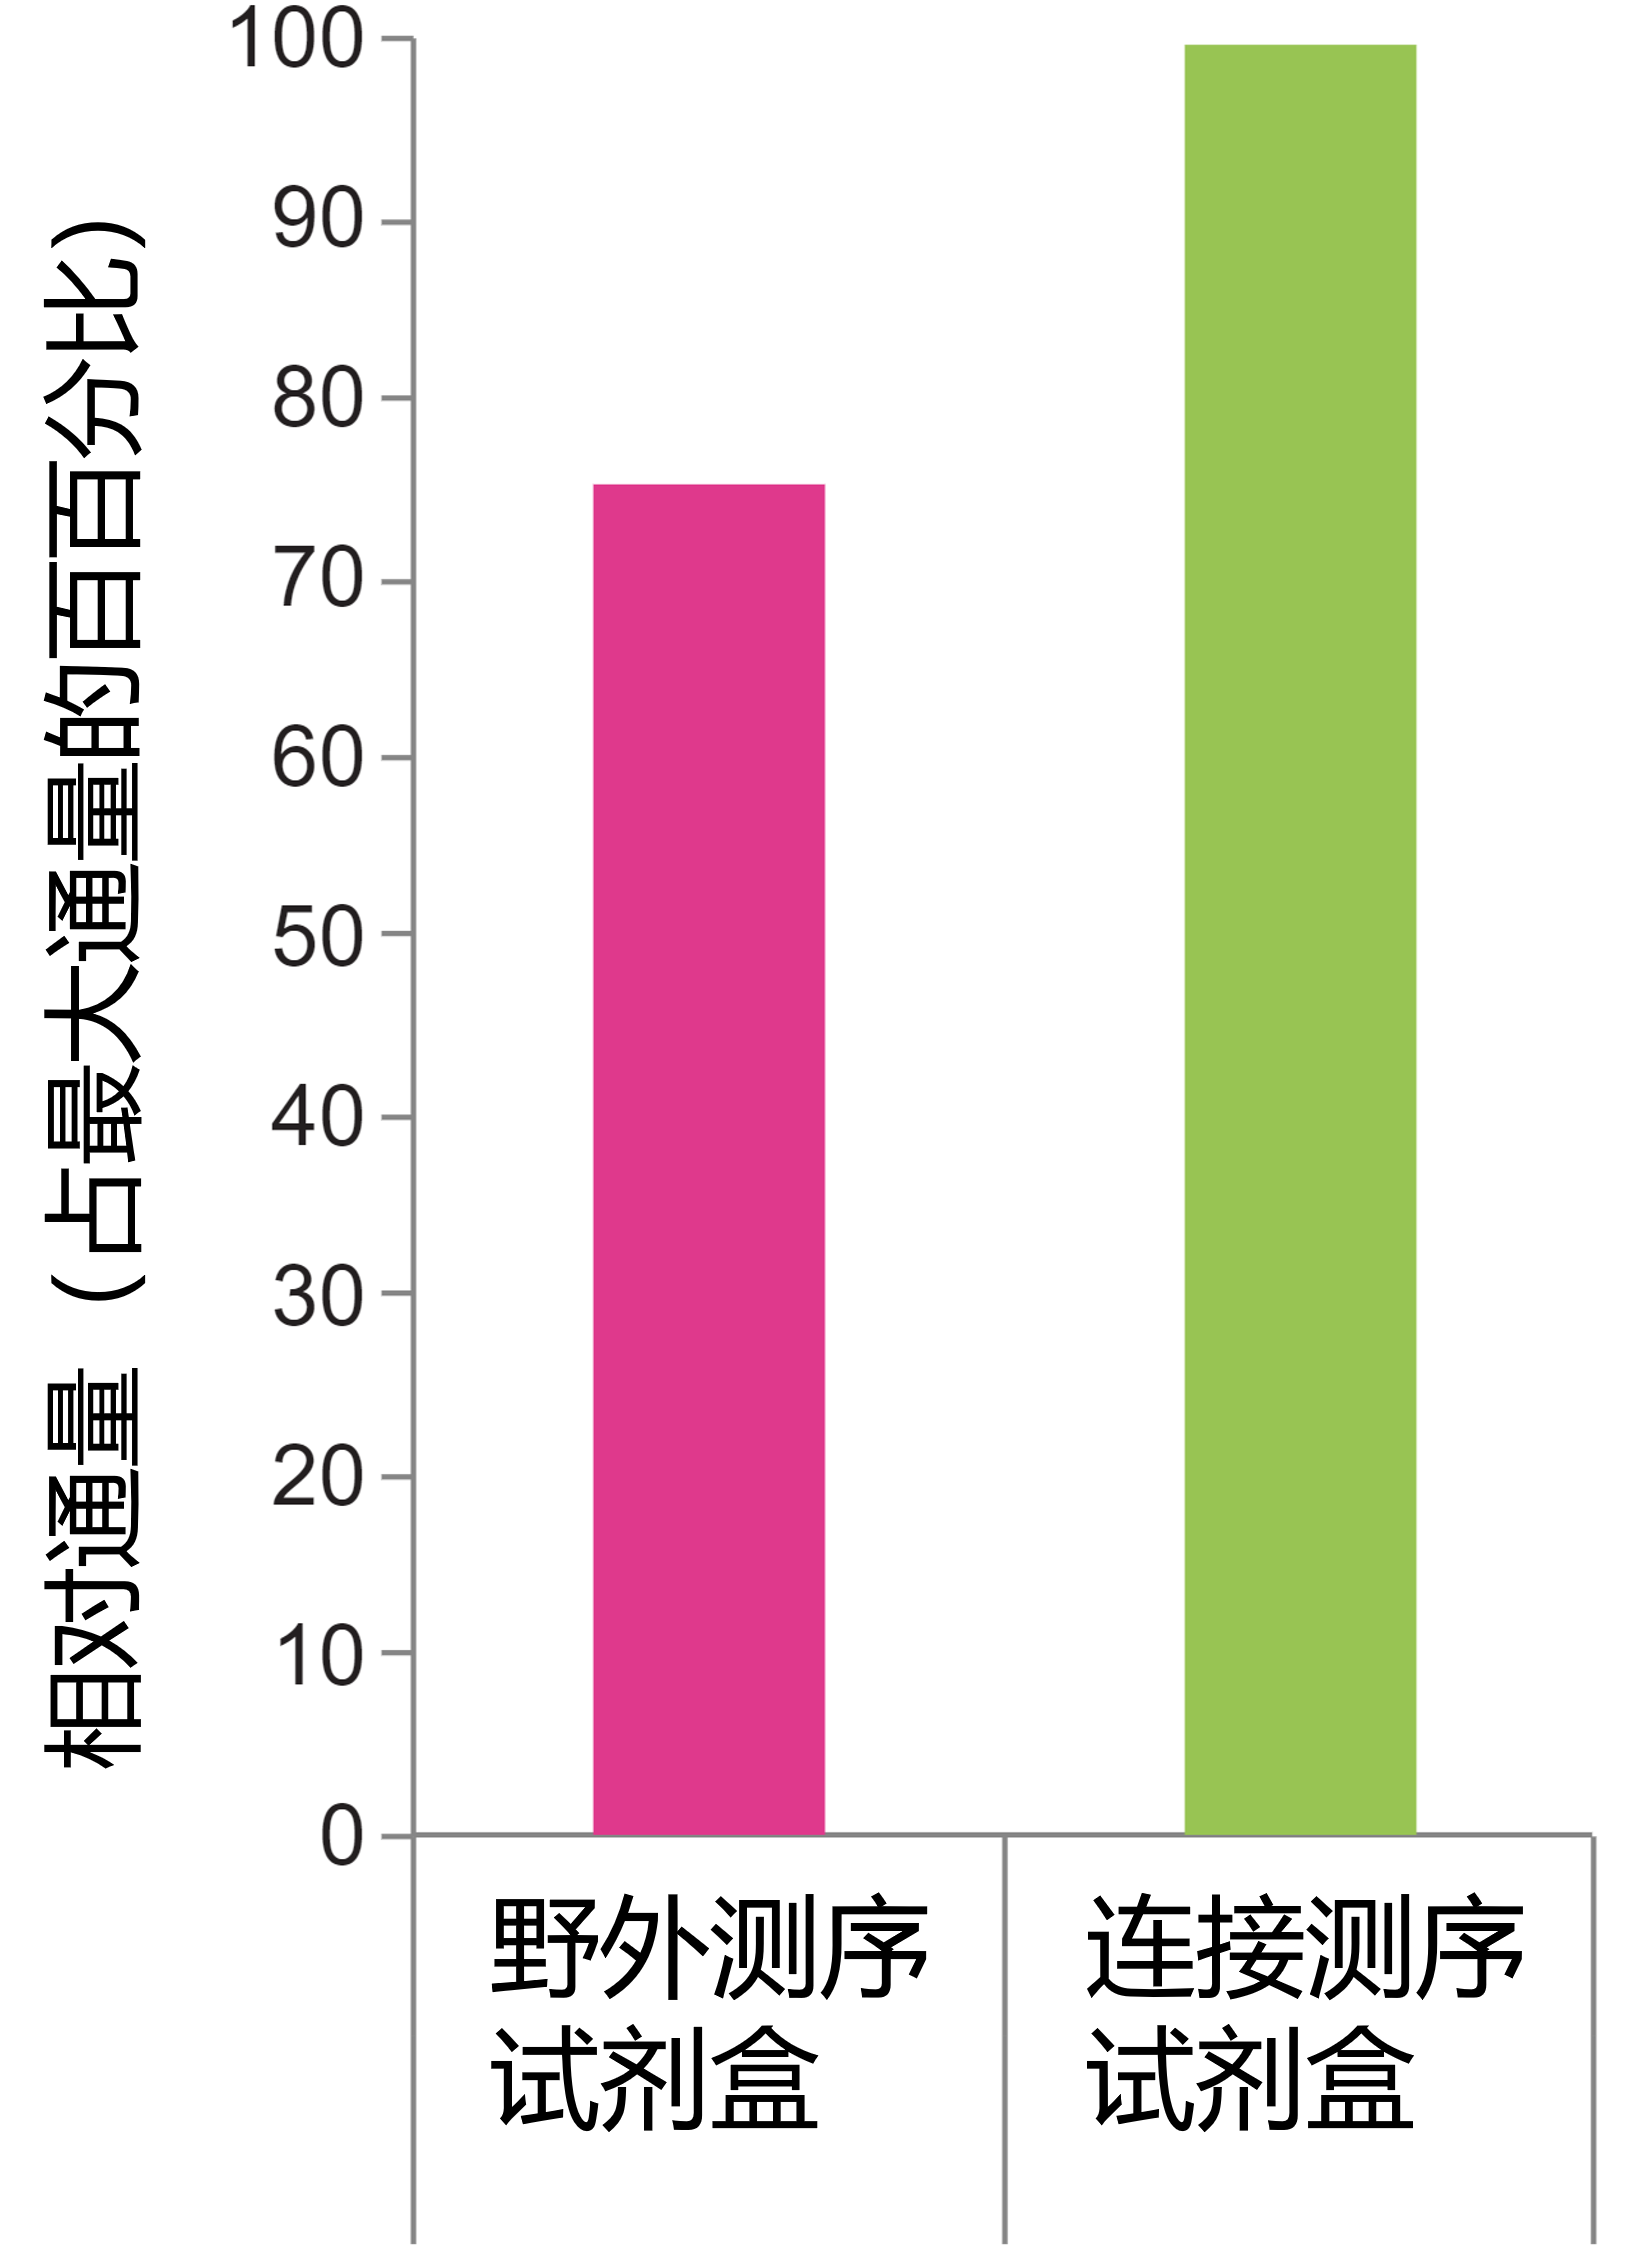 Chinese LRK001 Throughput Percentages